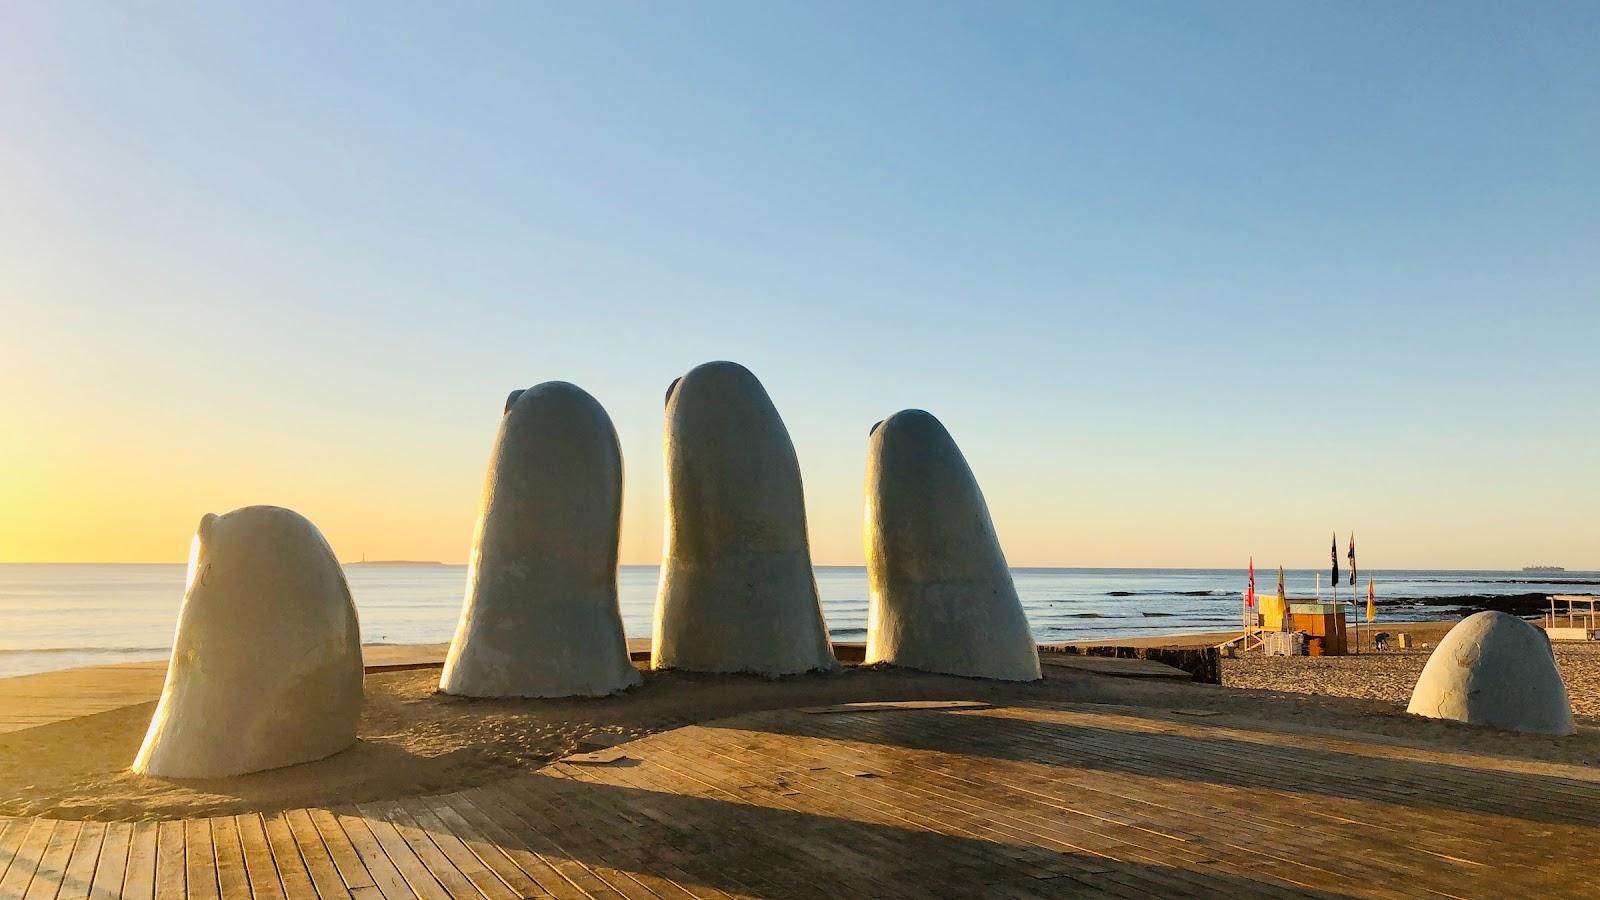 A Uruguayan 5 fingered statue sticking out of a beach.